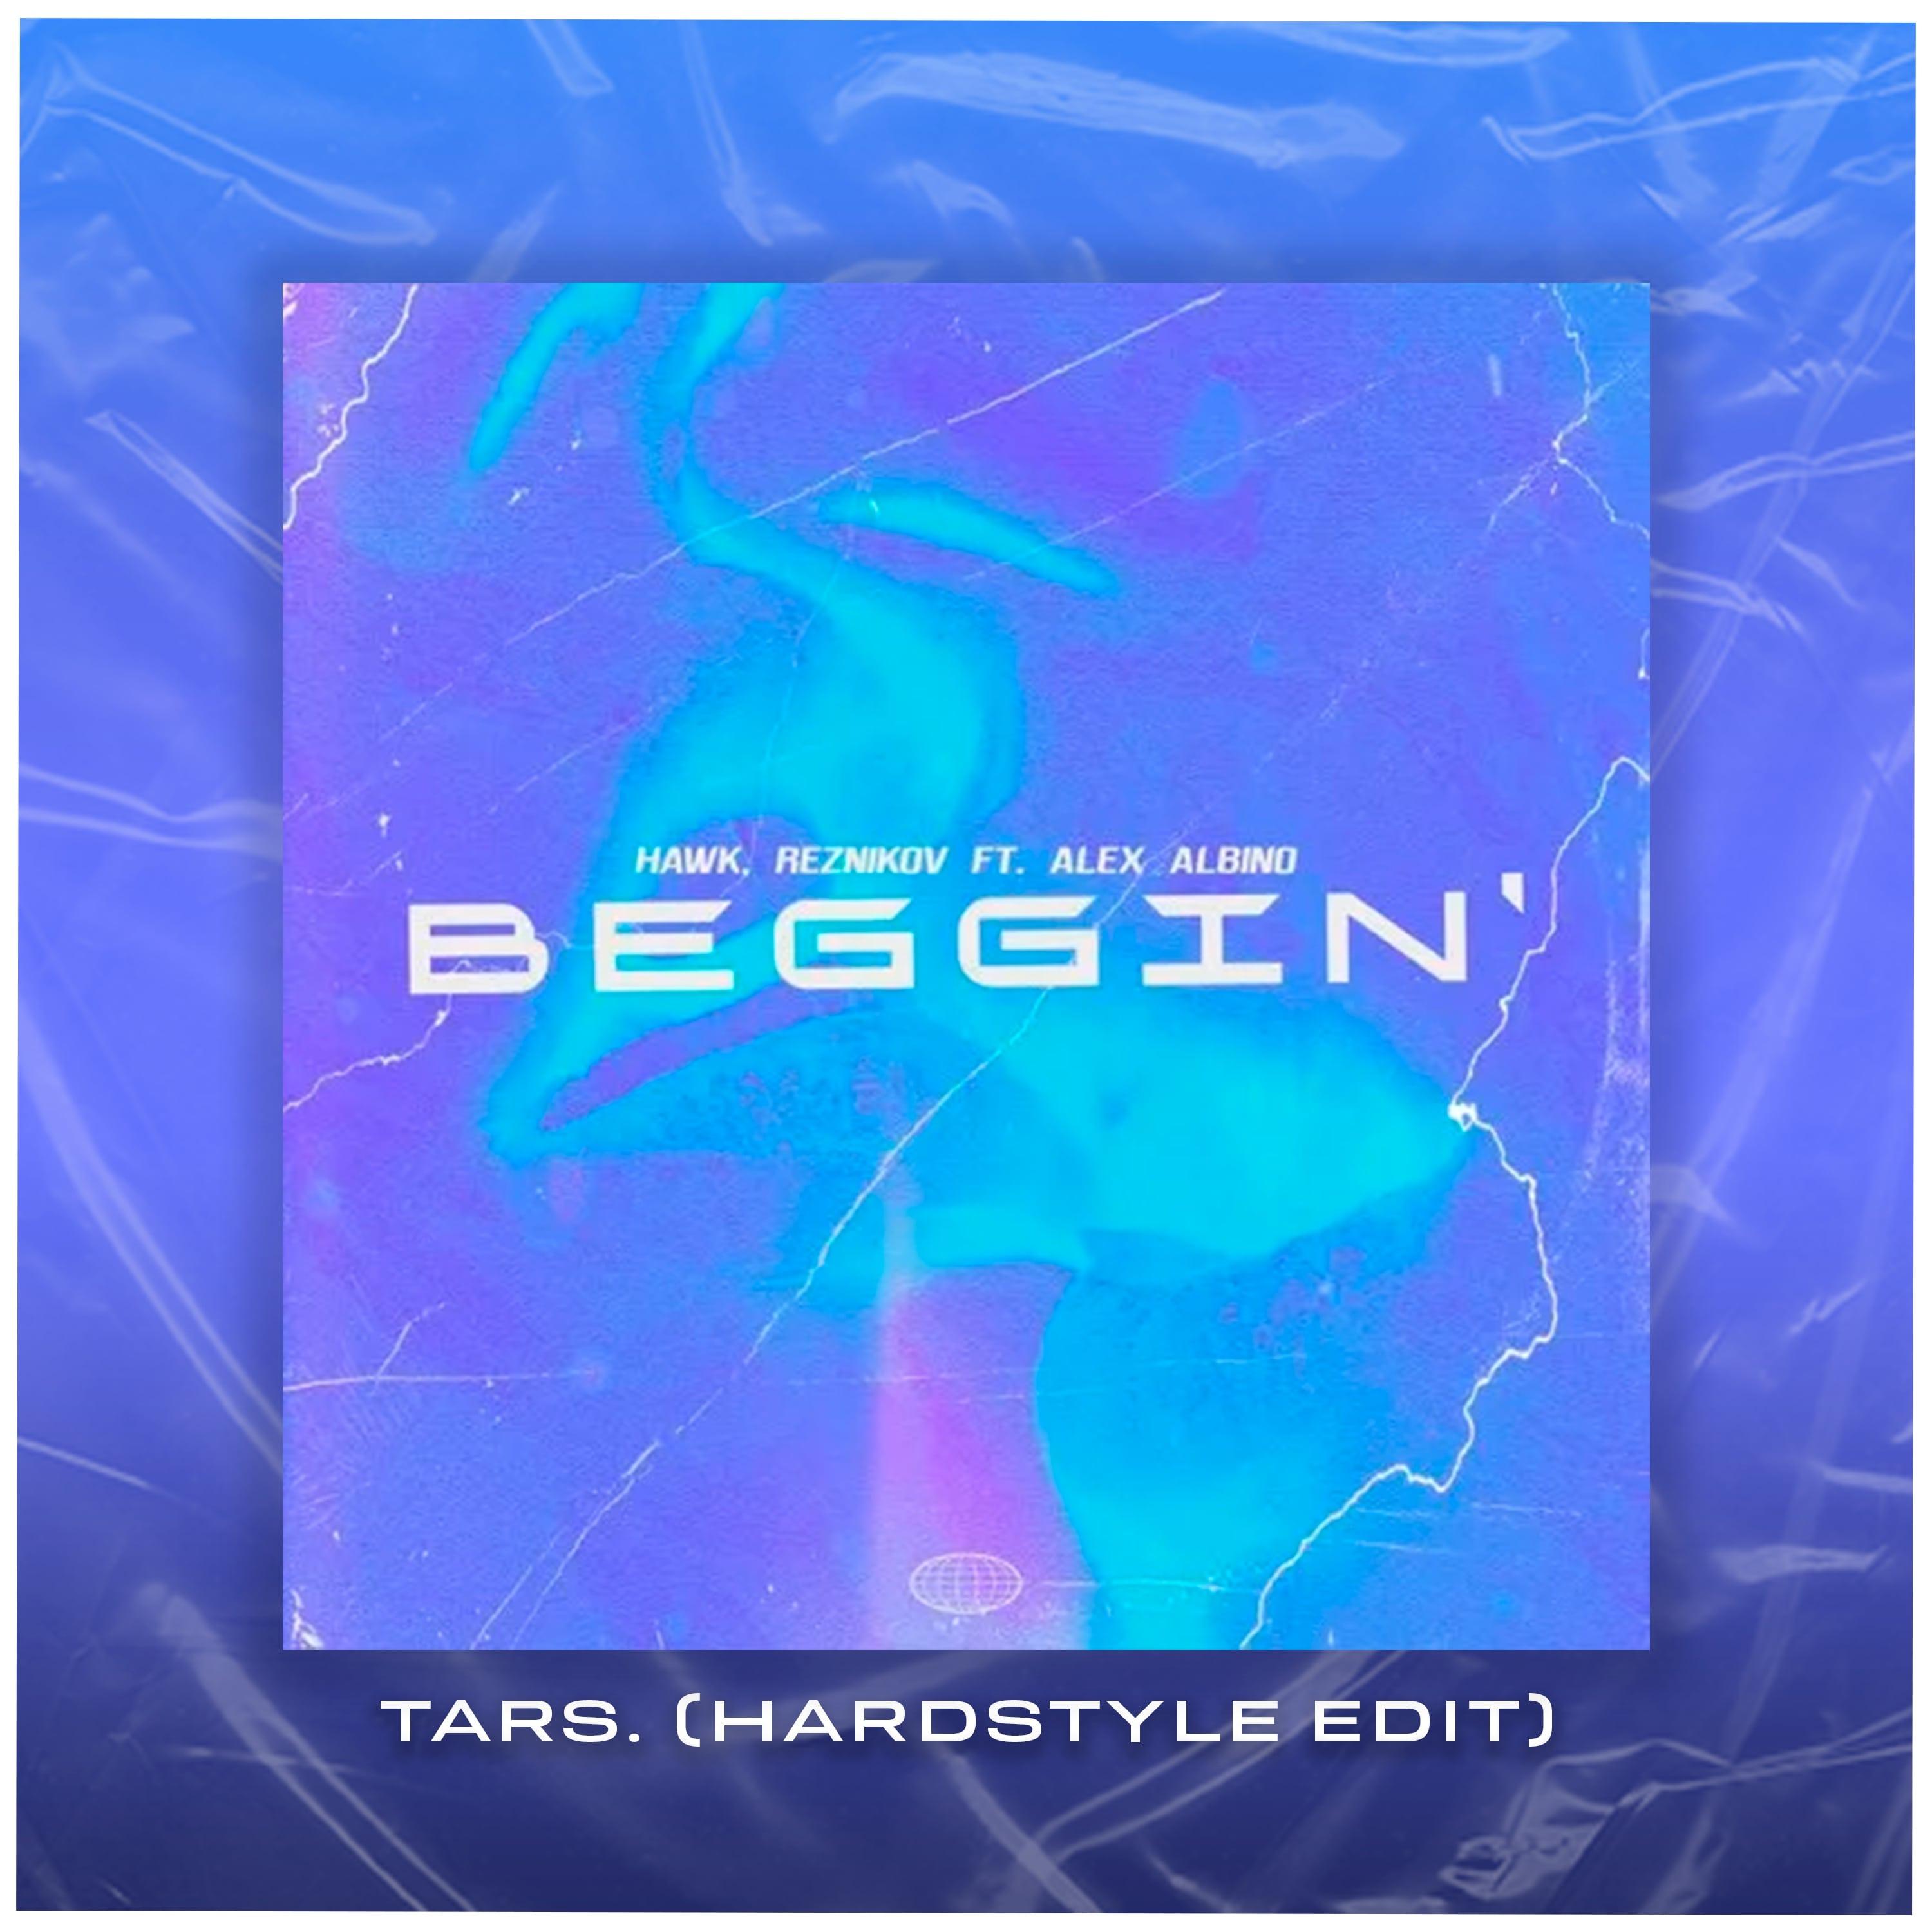 HAWK. - Beggin' (feat. TARS.) [HARDSTYLE EDIT]